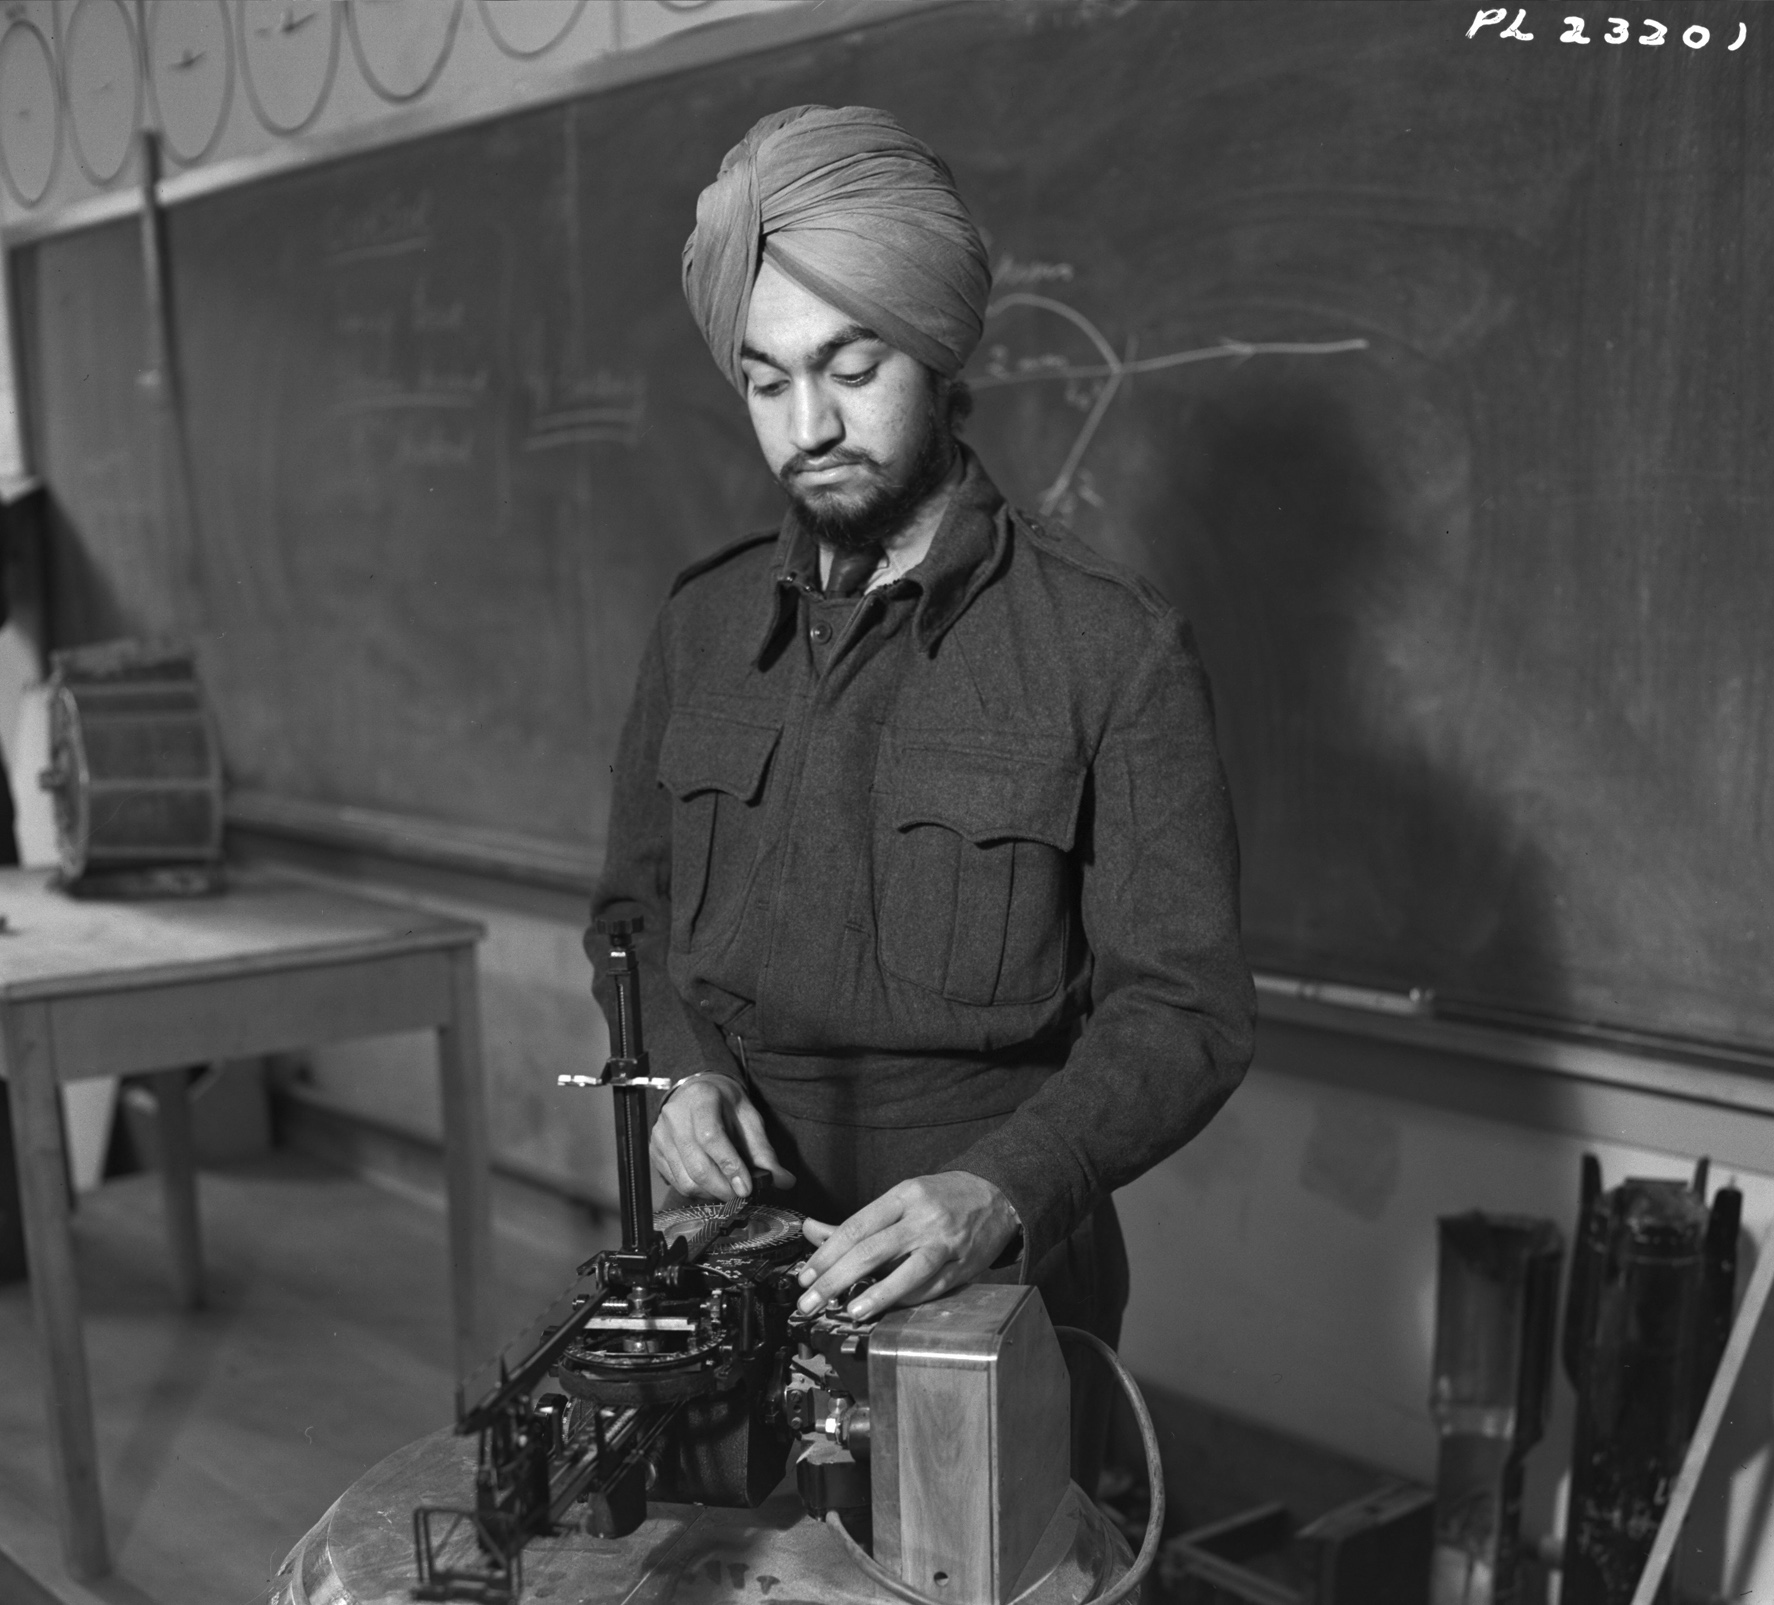 Leading Aircraftman Rajinder Singh Sandhu, from Pakho Pur, India, examines the mechanics of a bomb sight at No. 41 Service Flying Training School at RCAF Weyburn, Saskatchewan. PHOTO: DND Archives, PL-23201